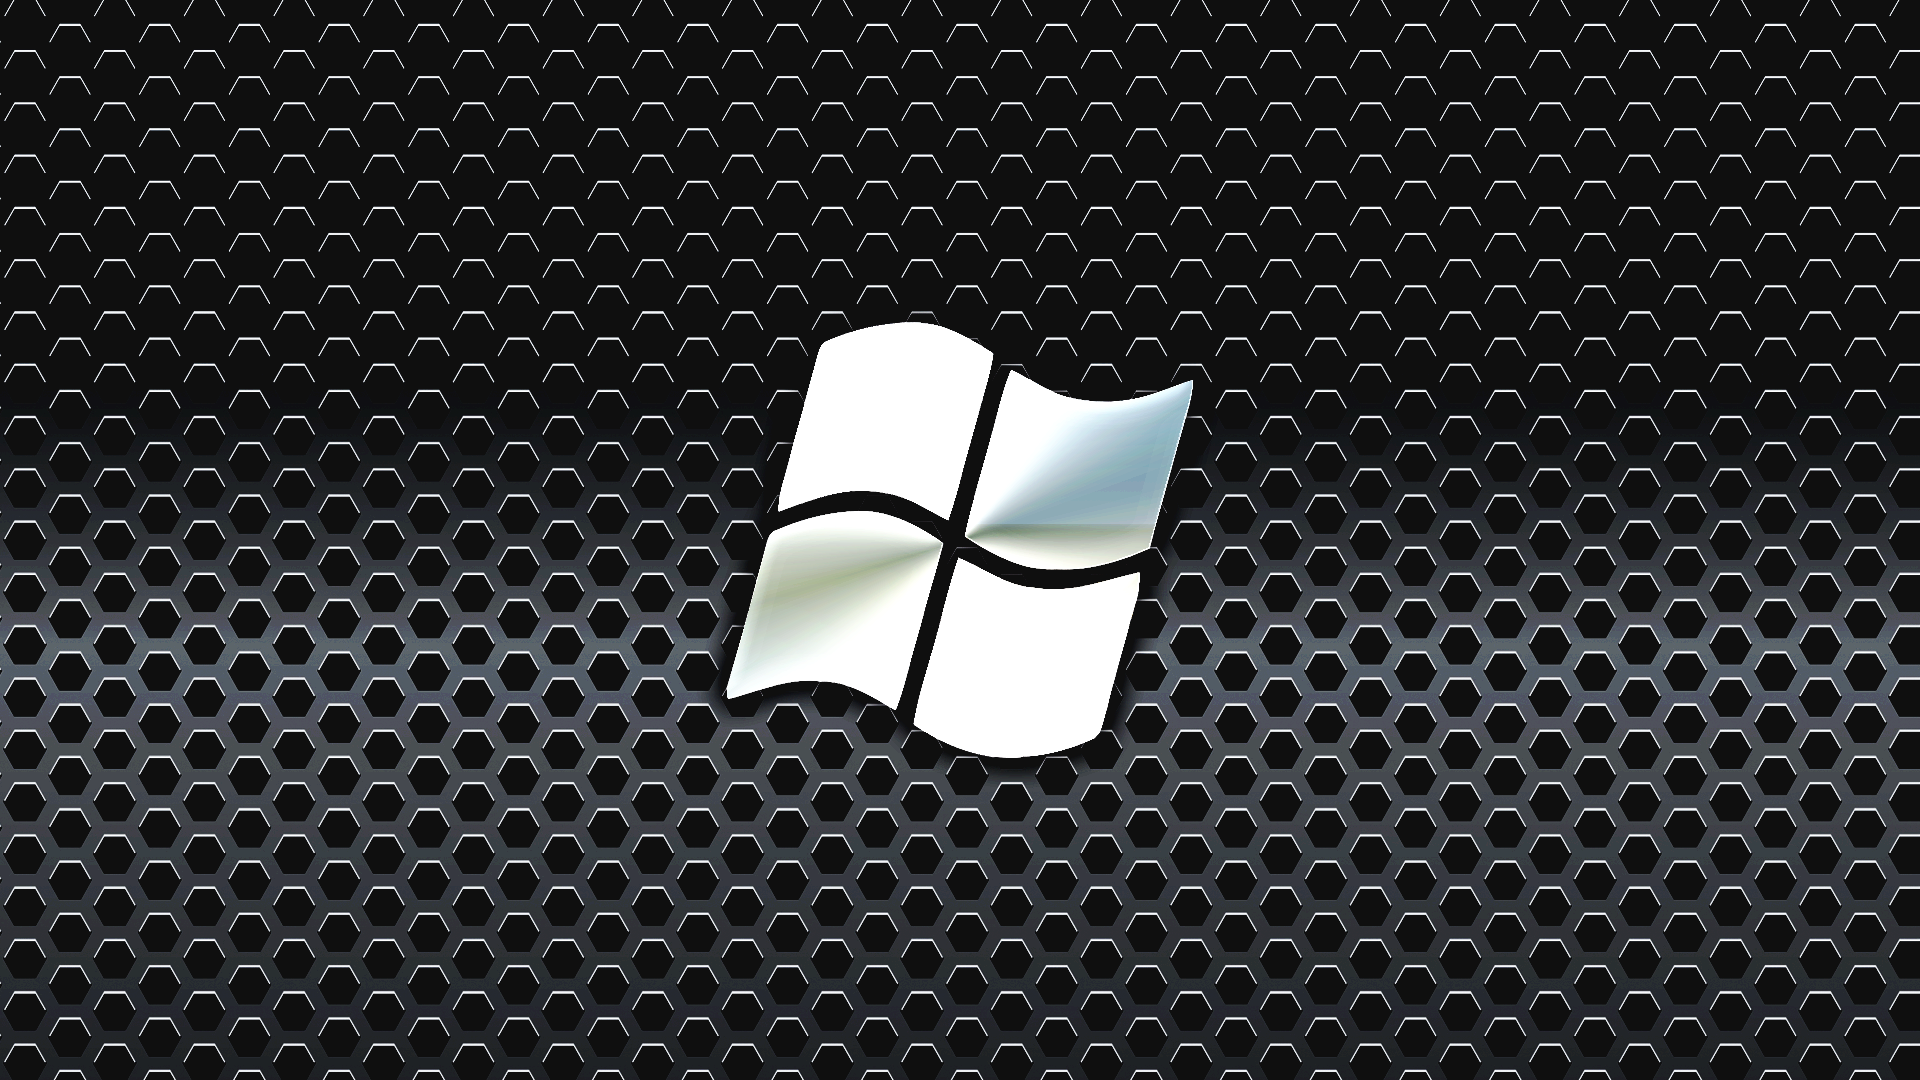 Microsoft Windows Wallpaper 1920x1080 Microsoft Windows Logos 1920x1080